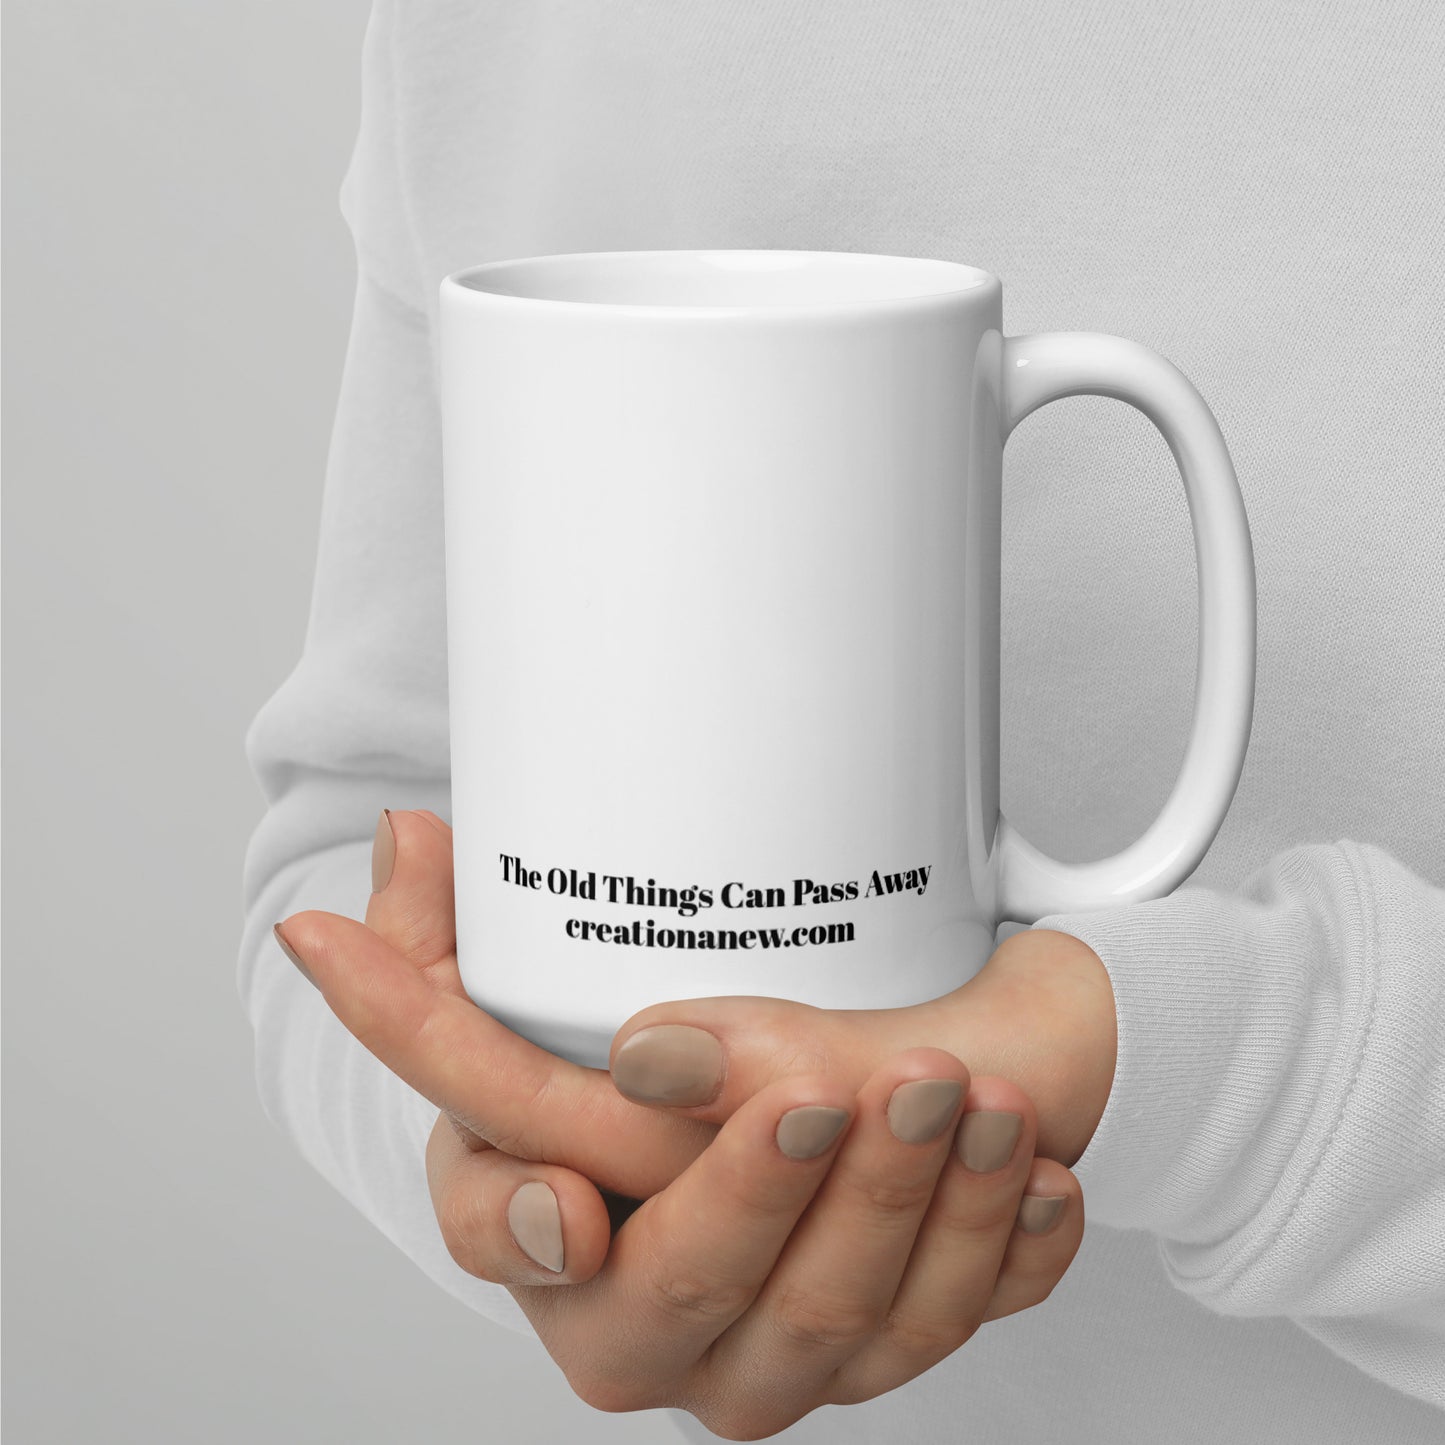 Creation Anew White glossy mug